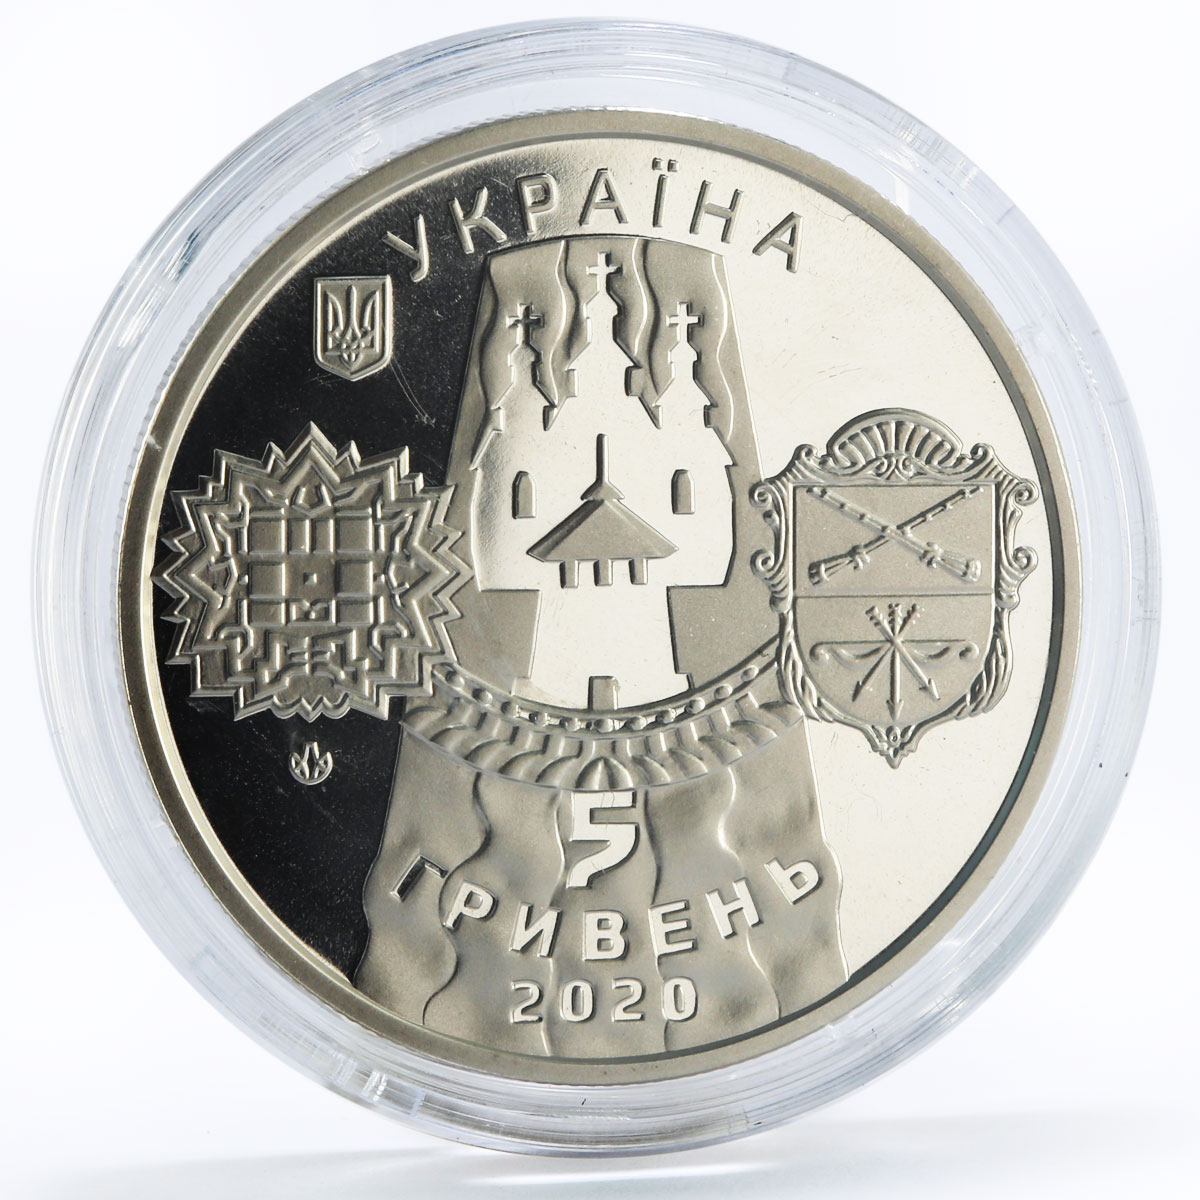 Ukraine 5 hryvnias Pleasant City of Zaporozhye nickel coin 2020